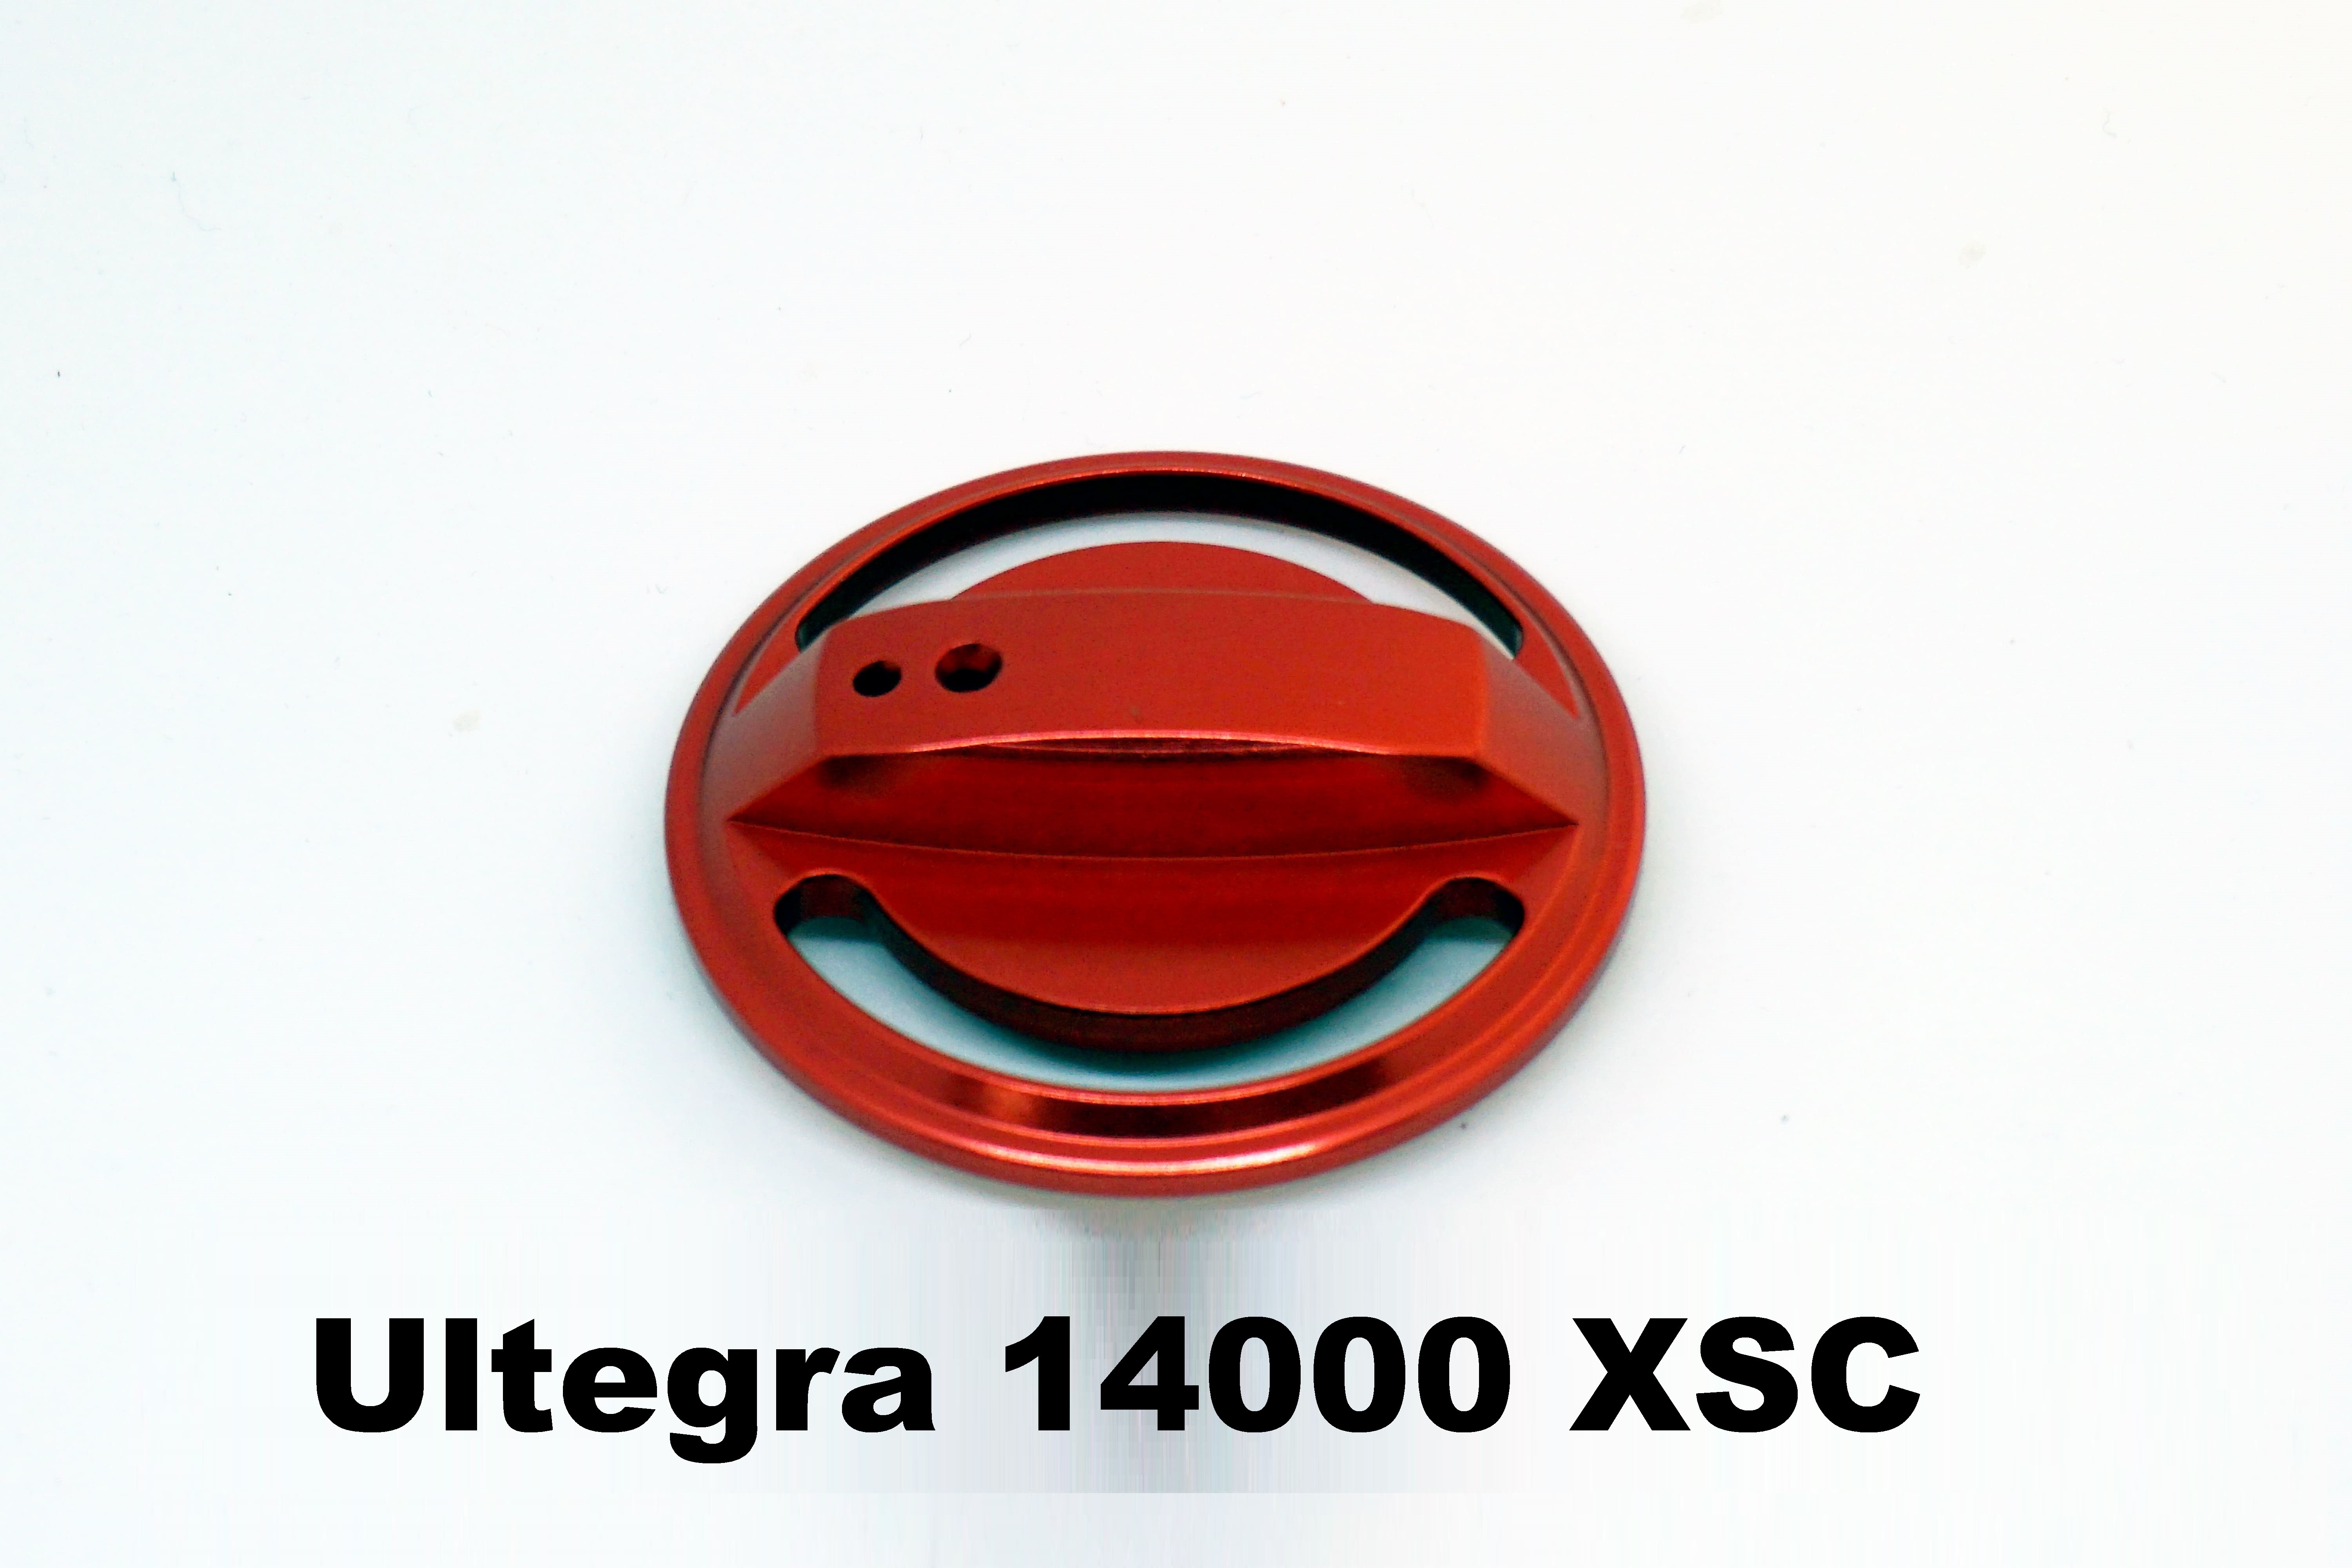 Drag Knob for Ultegra 14000 XSC